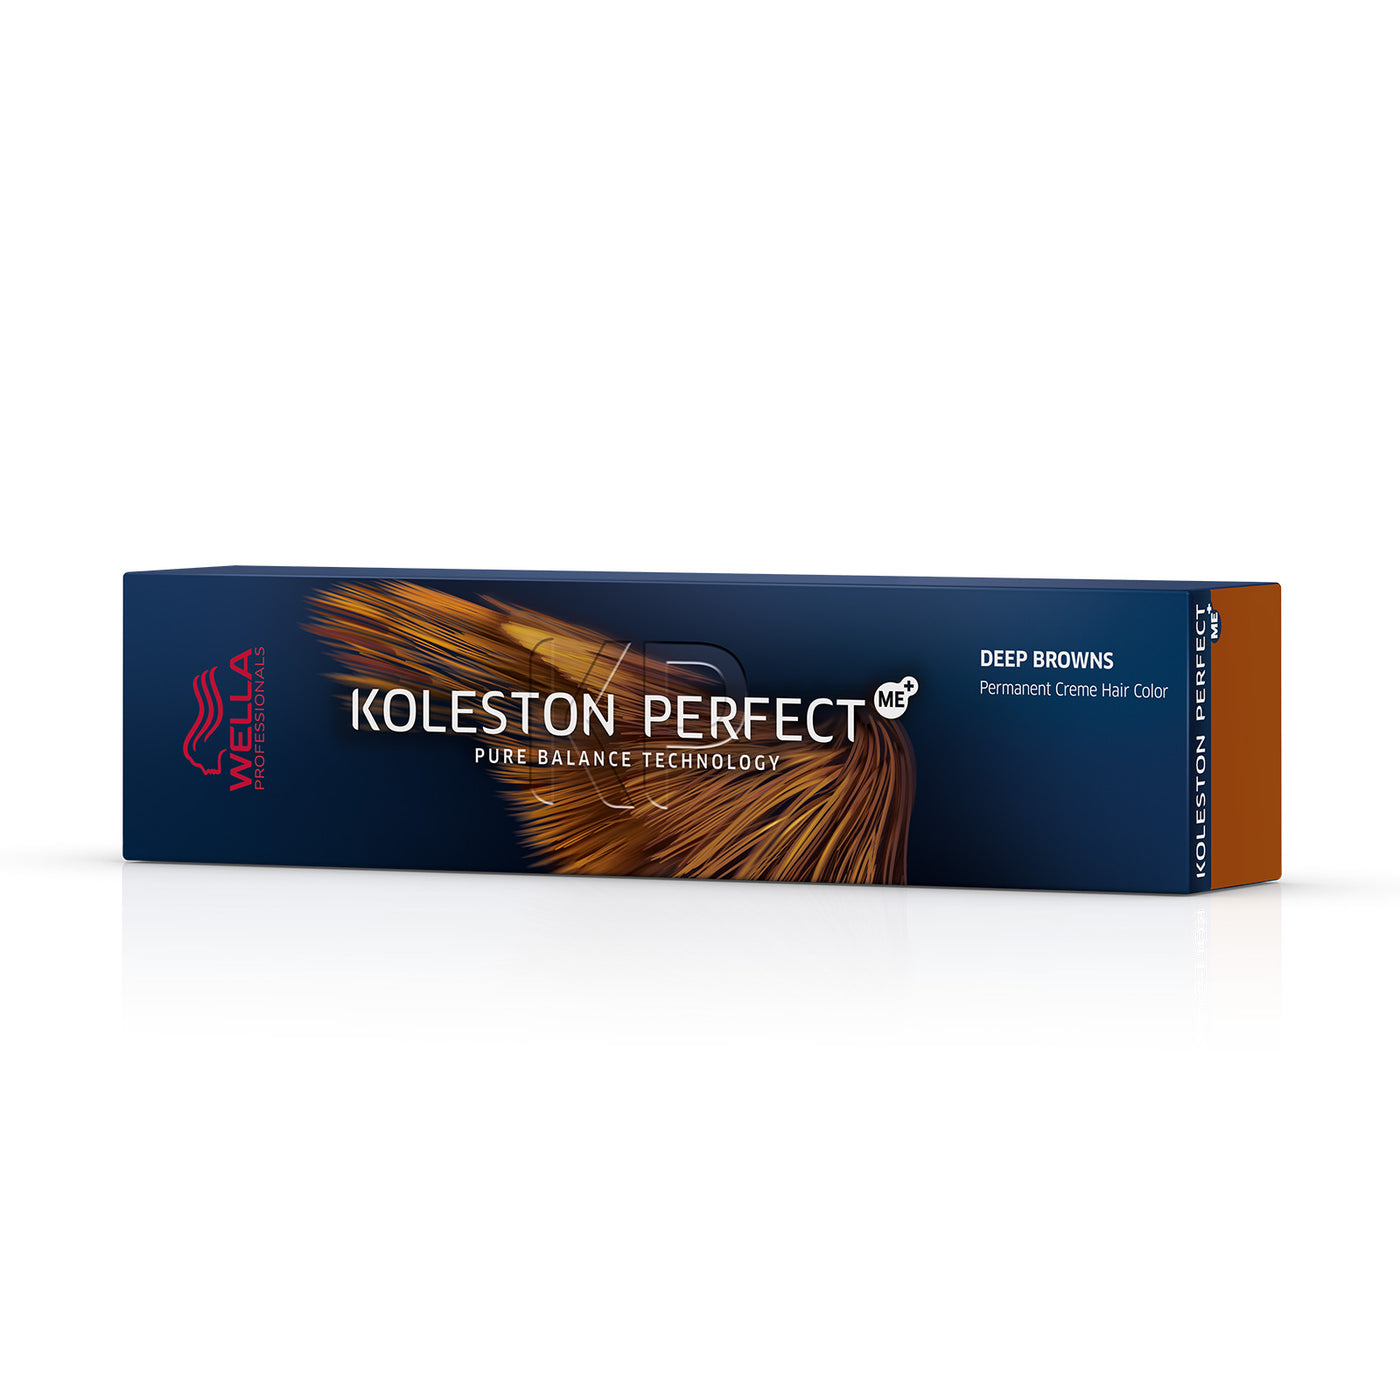 Wella Professionals Koleston Perfect Permanent Hair Colour (60g) - Deep Browns packaging